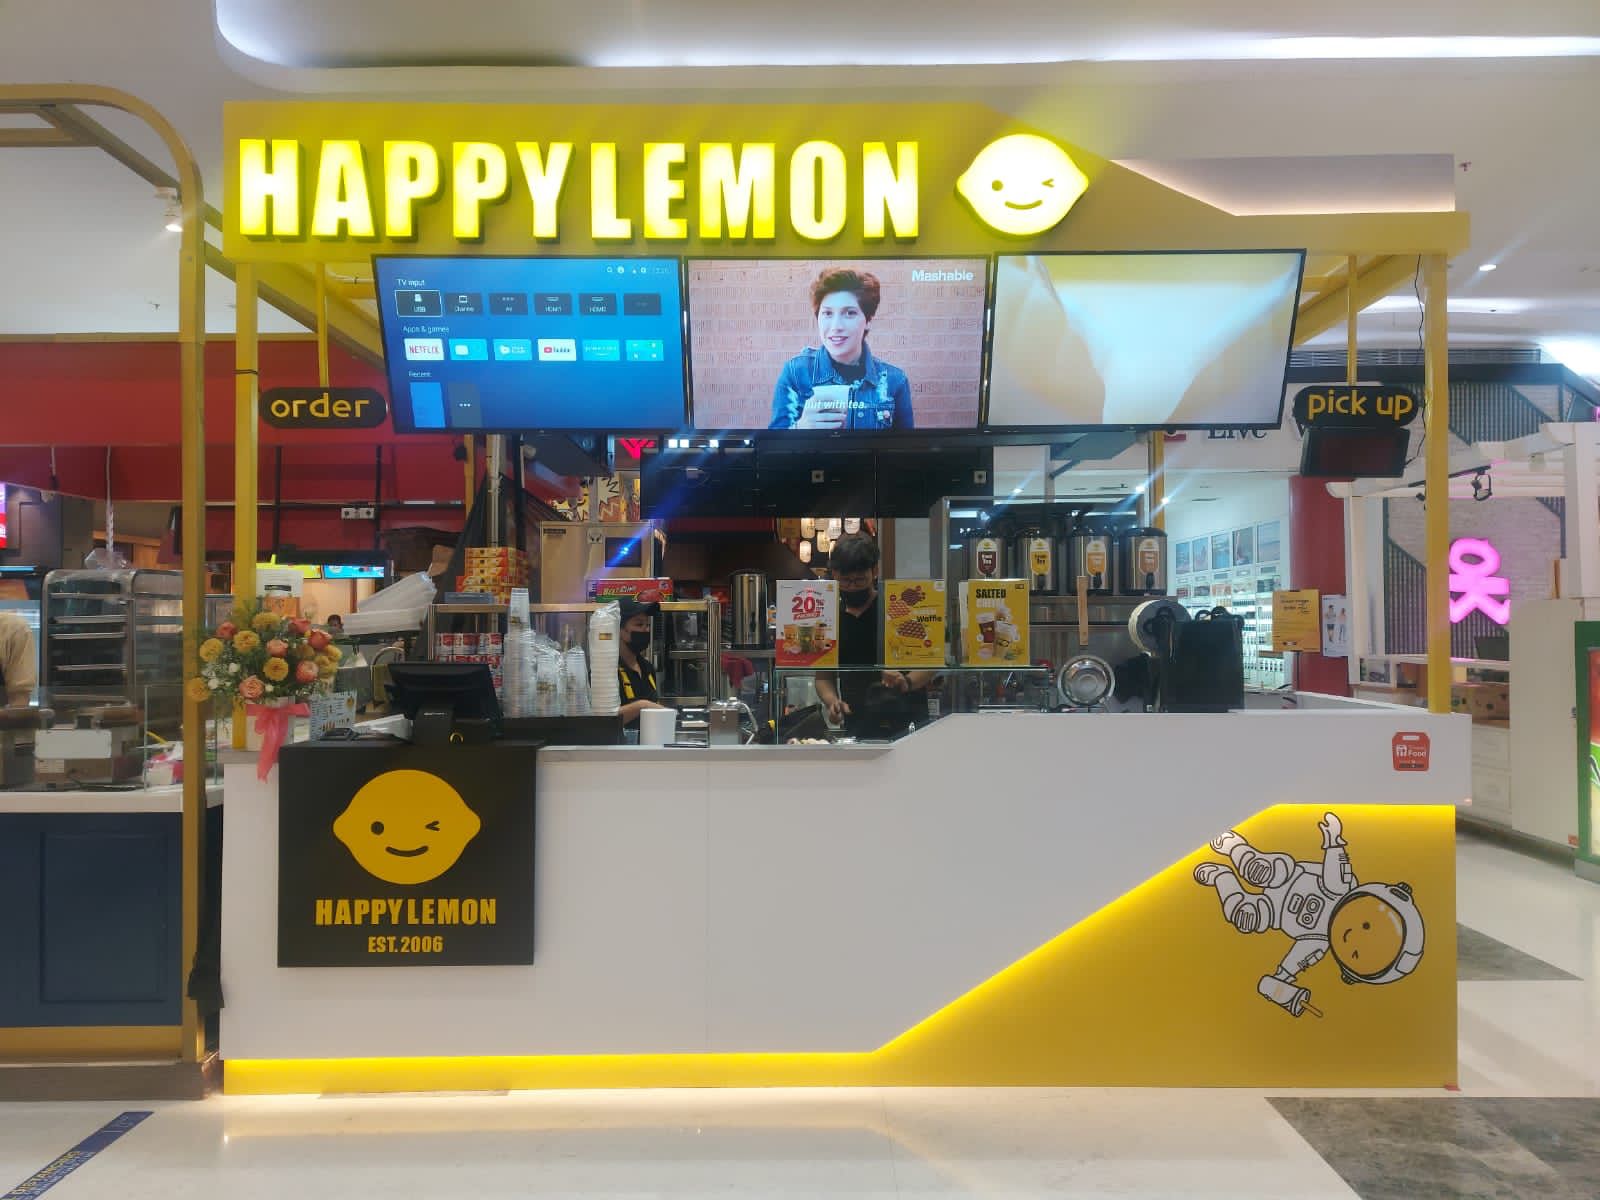 HAPPYLEMON shop front in lippo mall puri st. moritz